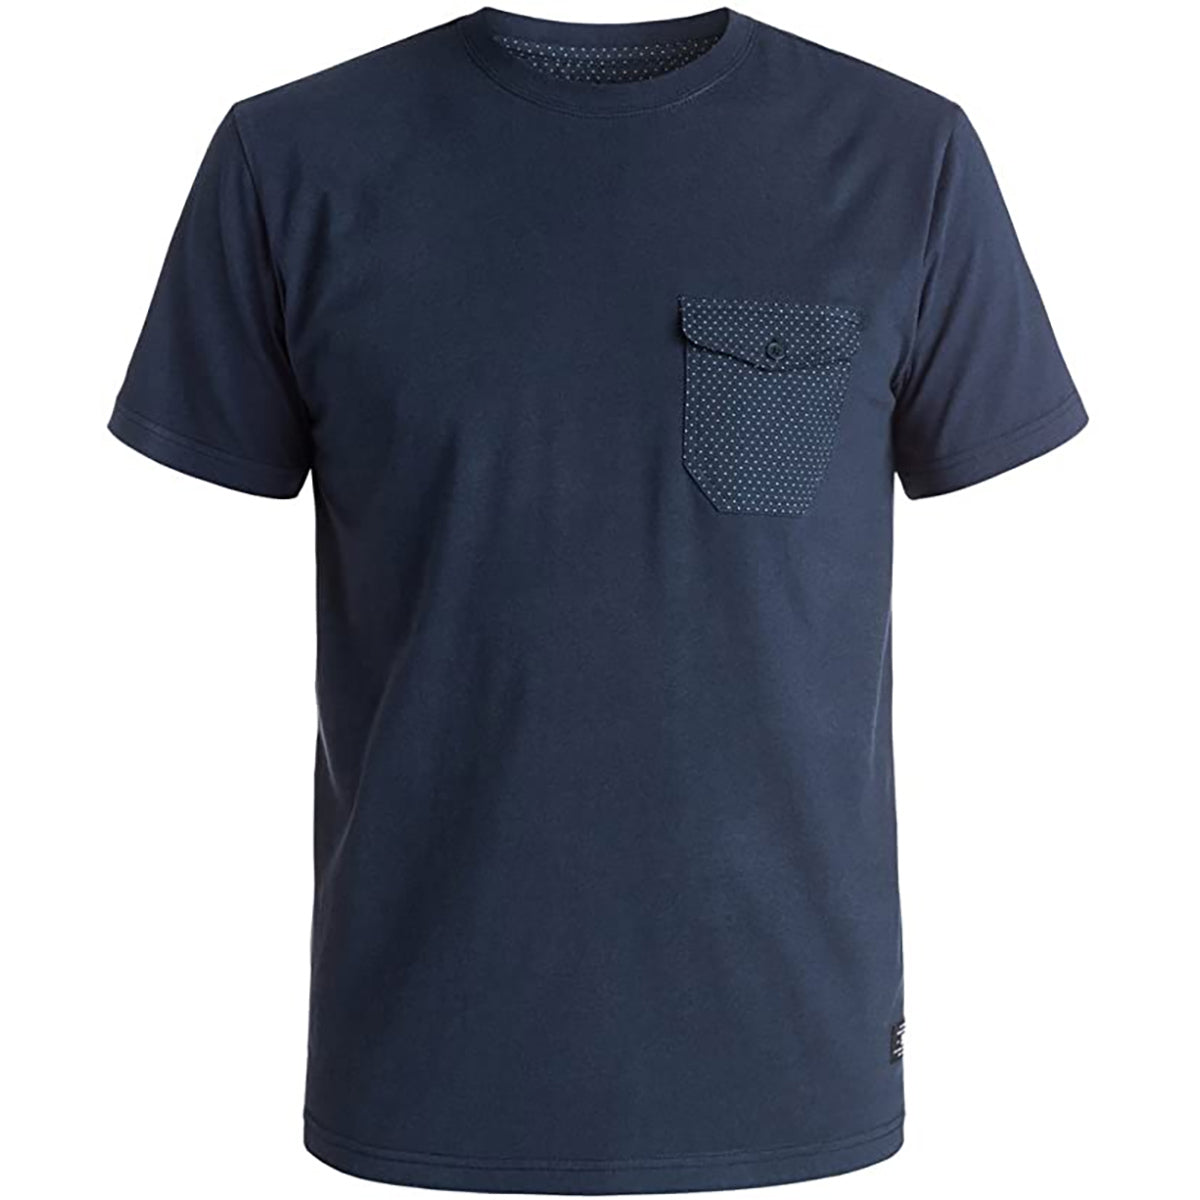 DC Hailey Morris Pocket Men's Short-Sleeve Shirts - Black Iris Dot